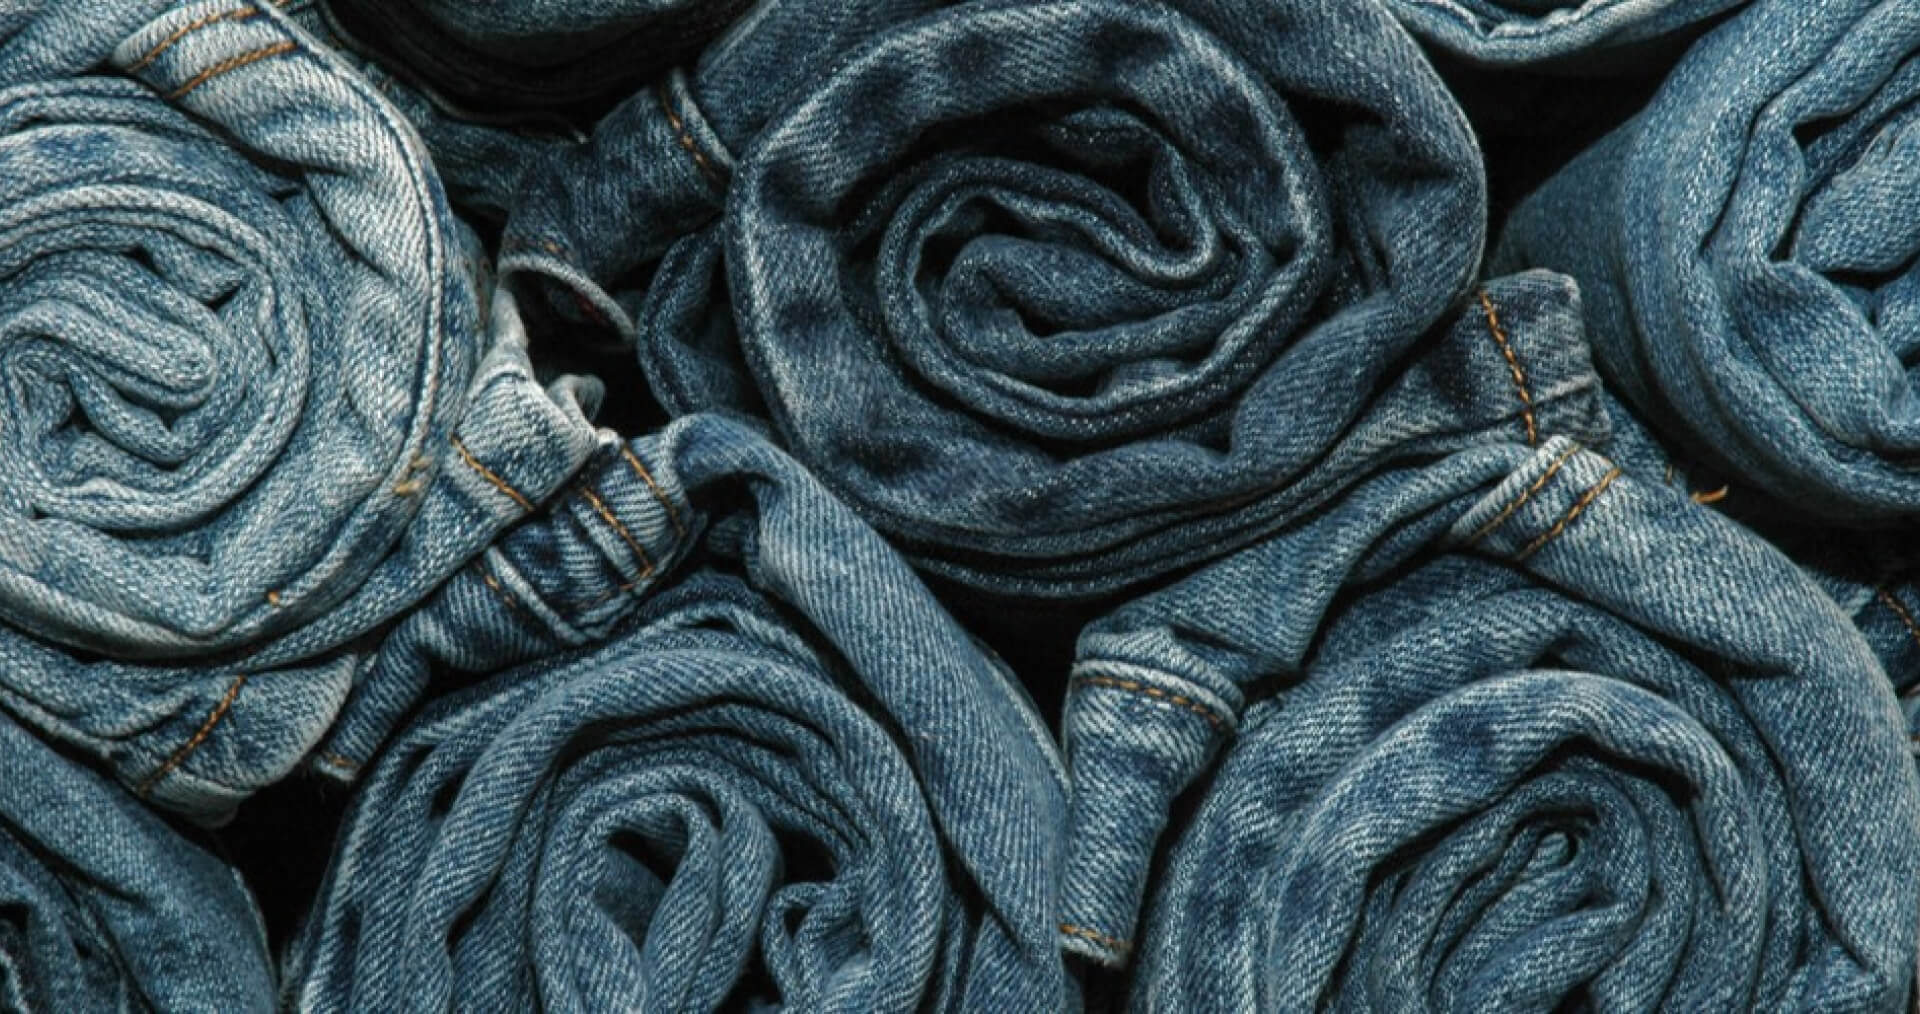 Stone wash grey jeans denim fabric close up photography, denim